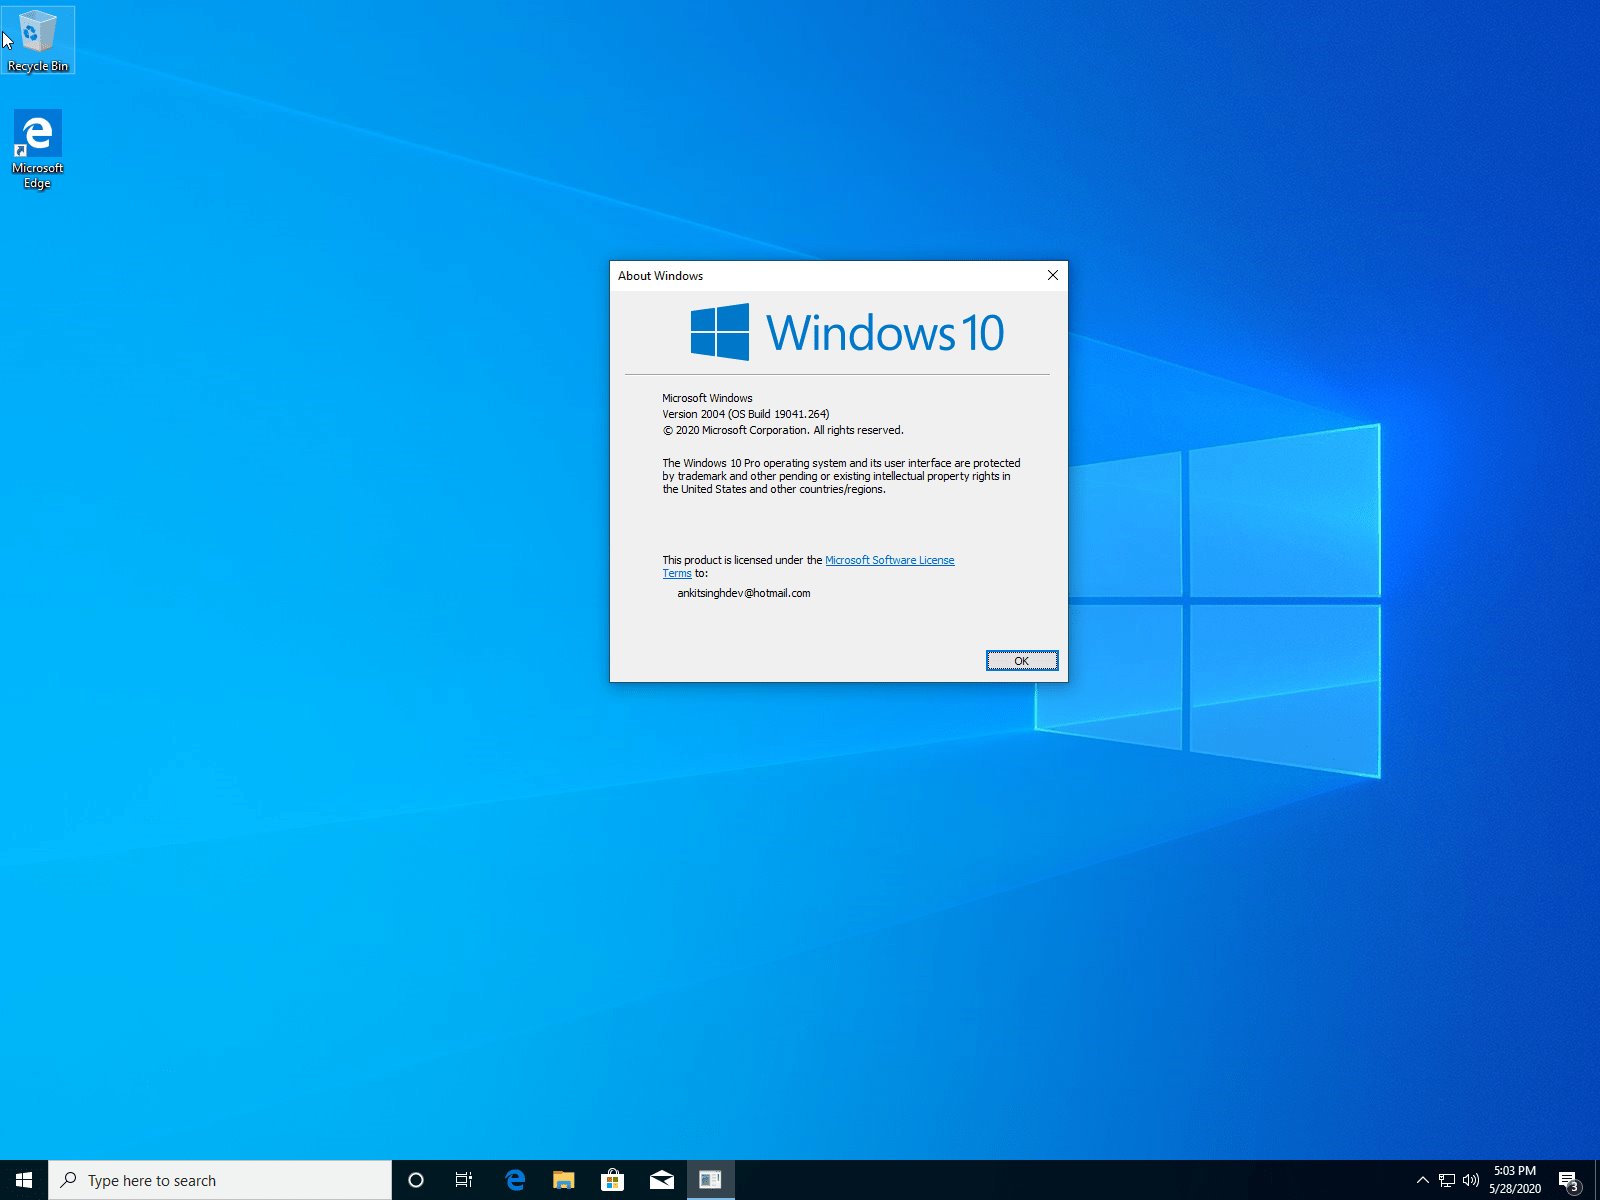 10 iso windows bit torrent with crack 64 download Windows 10